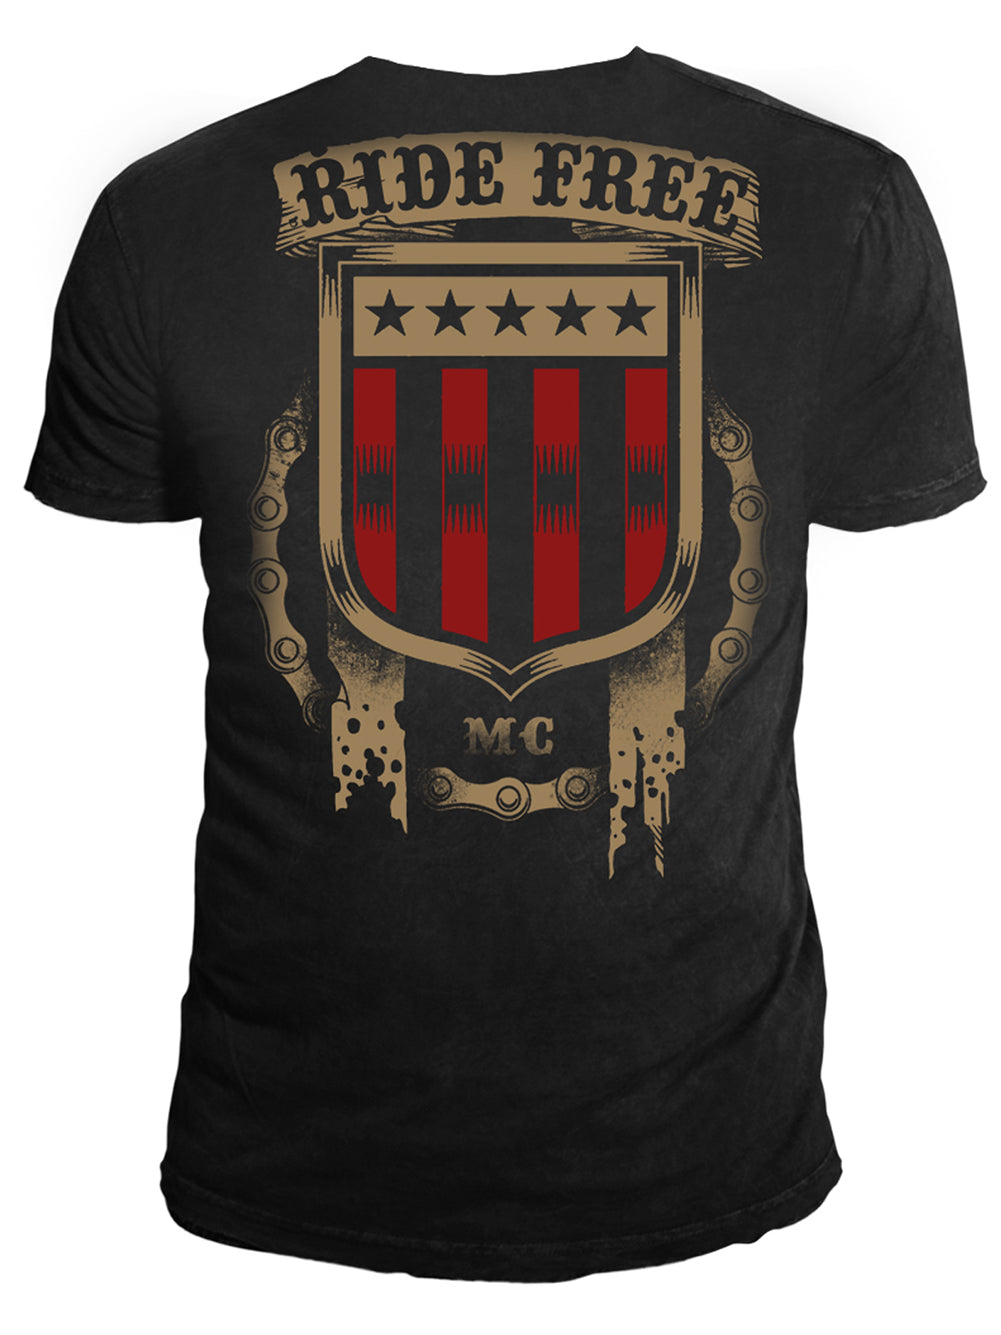 Ryder Supply Clothing - Eagle Mens T-shirt (Black)